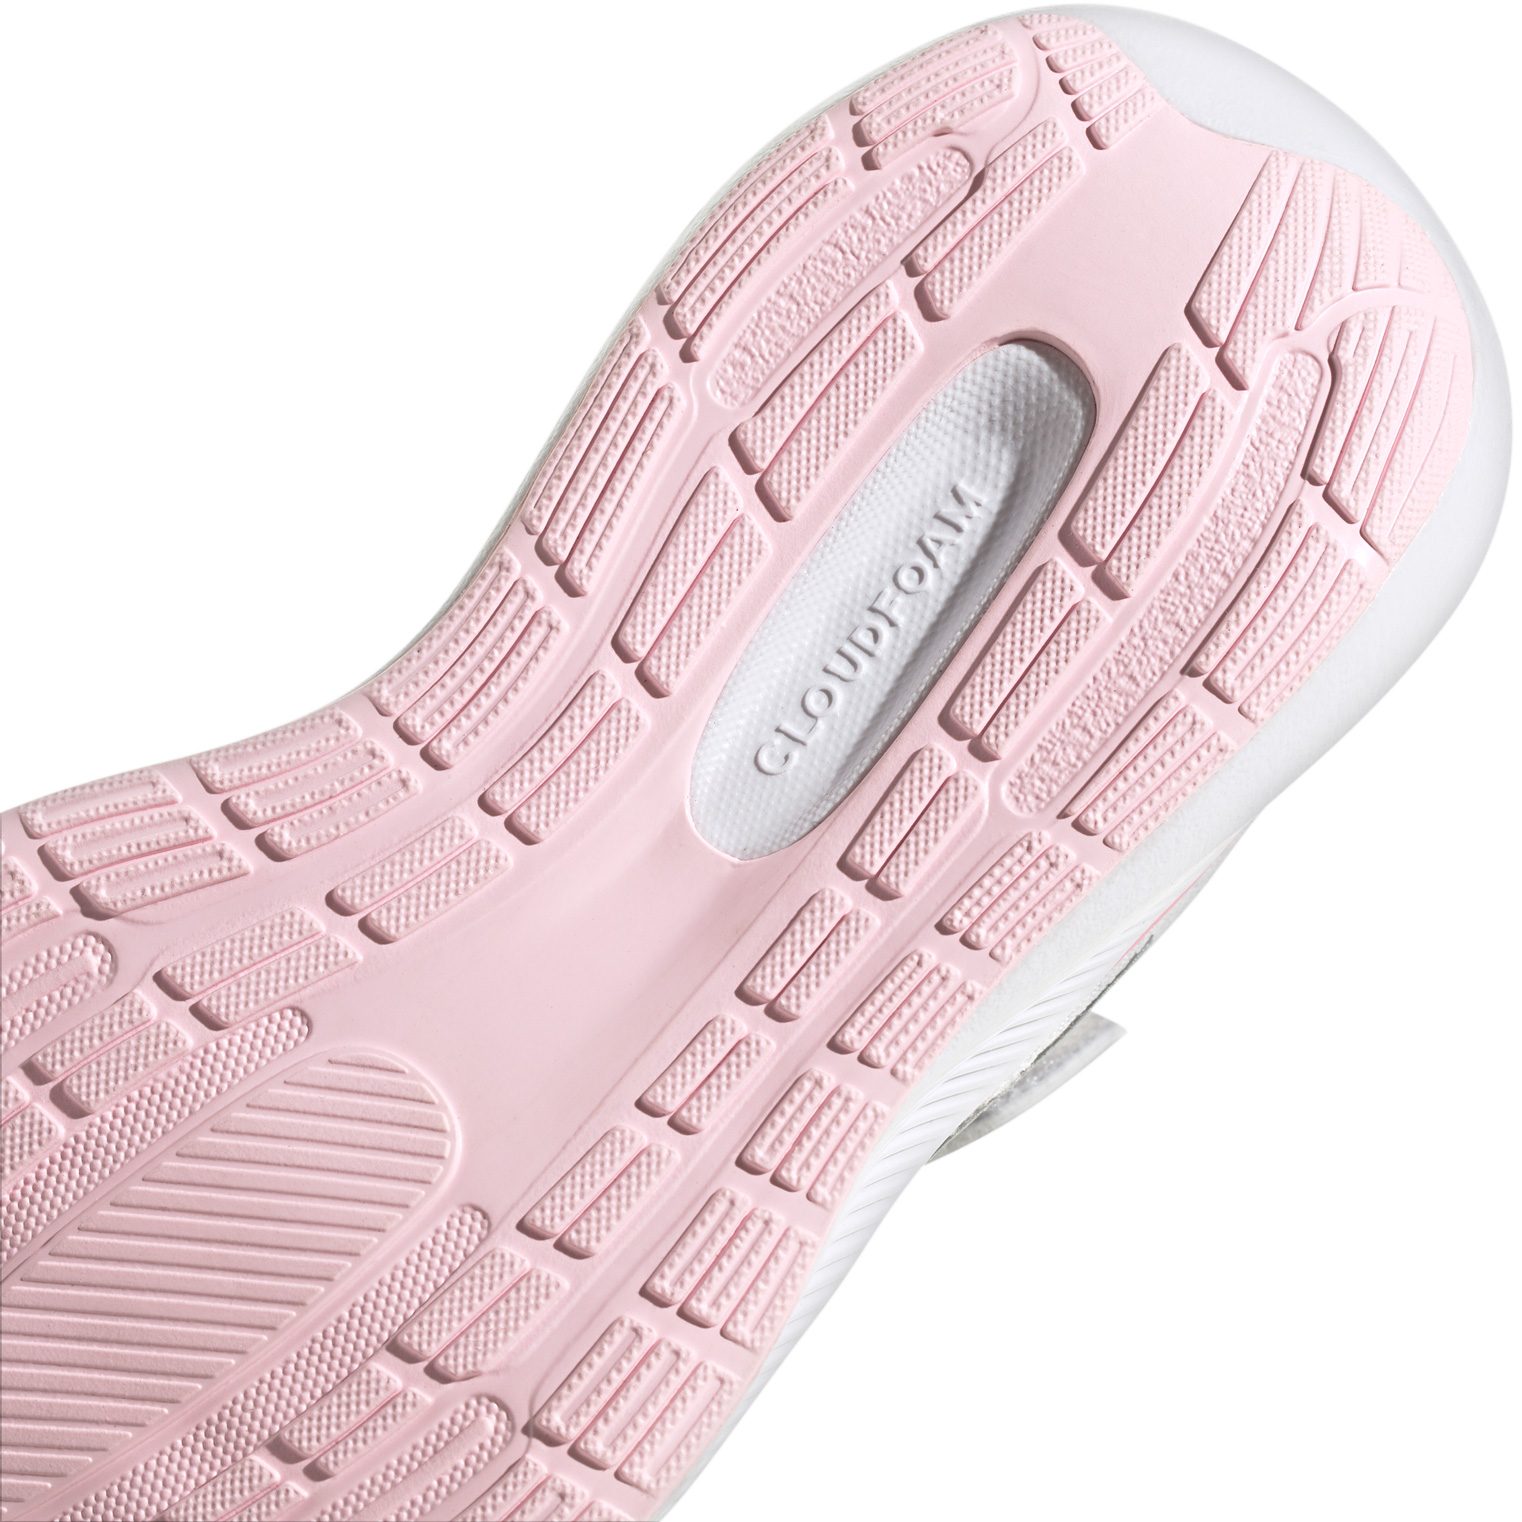 adidas - RunFalcon 3.0 Elastic Lace Top Strap Laufschuhe Kinder dash grey  kaufen im Sport Bittl Shop